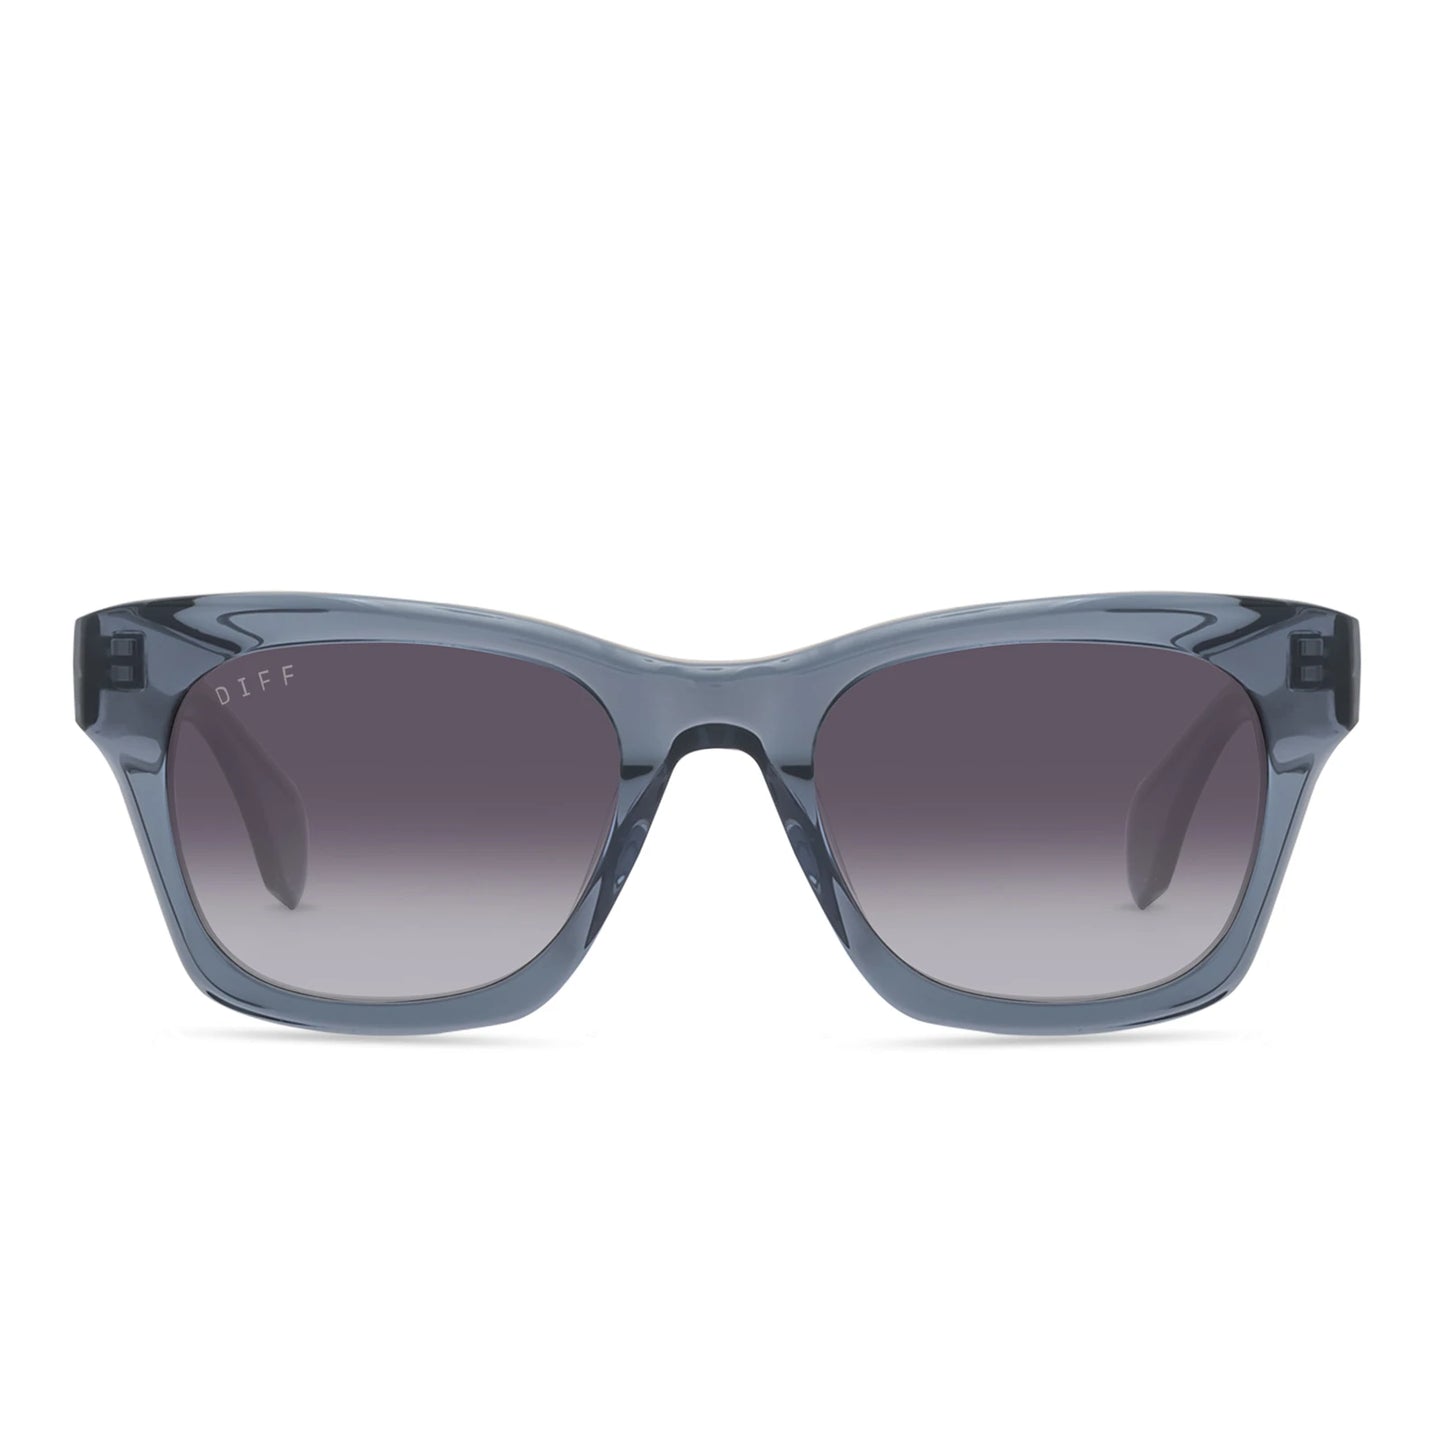 Dean Night Sky/Grey Gradient Sunglasses